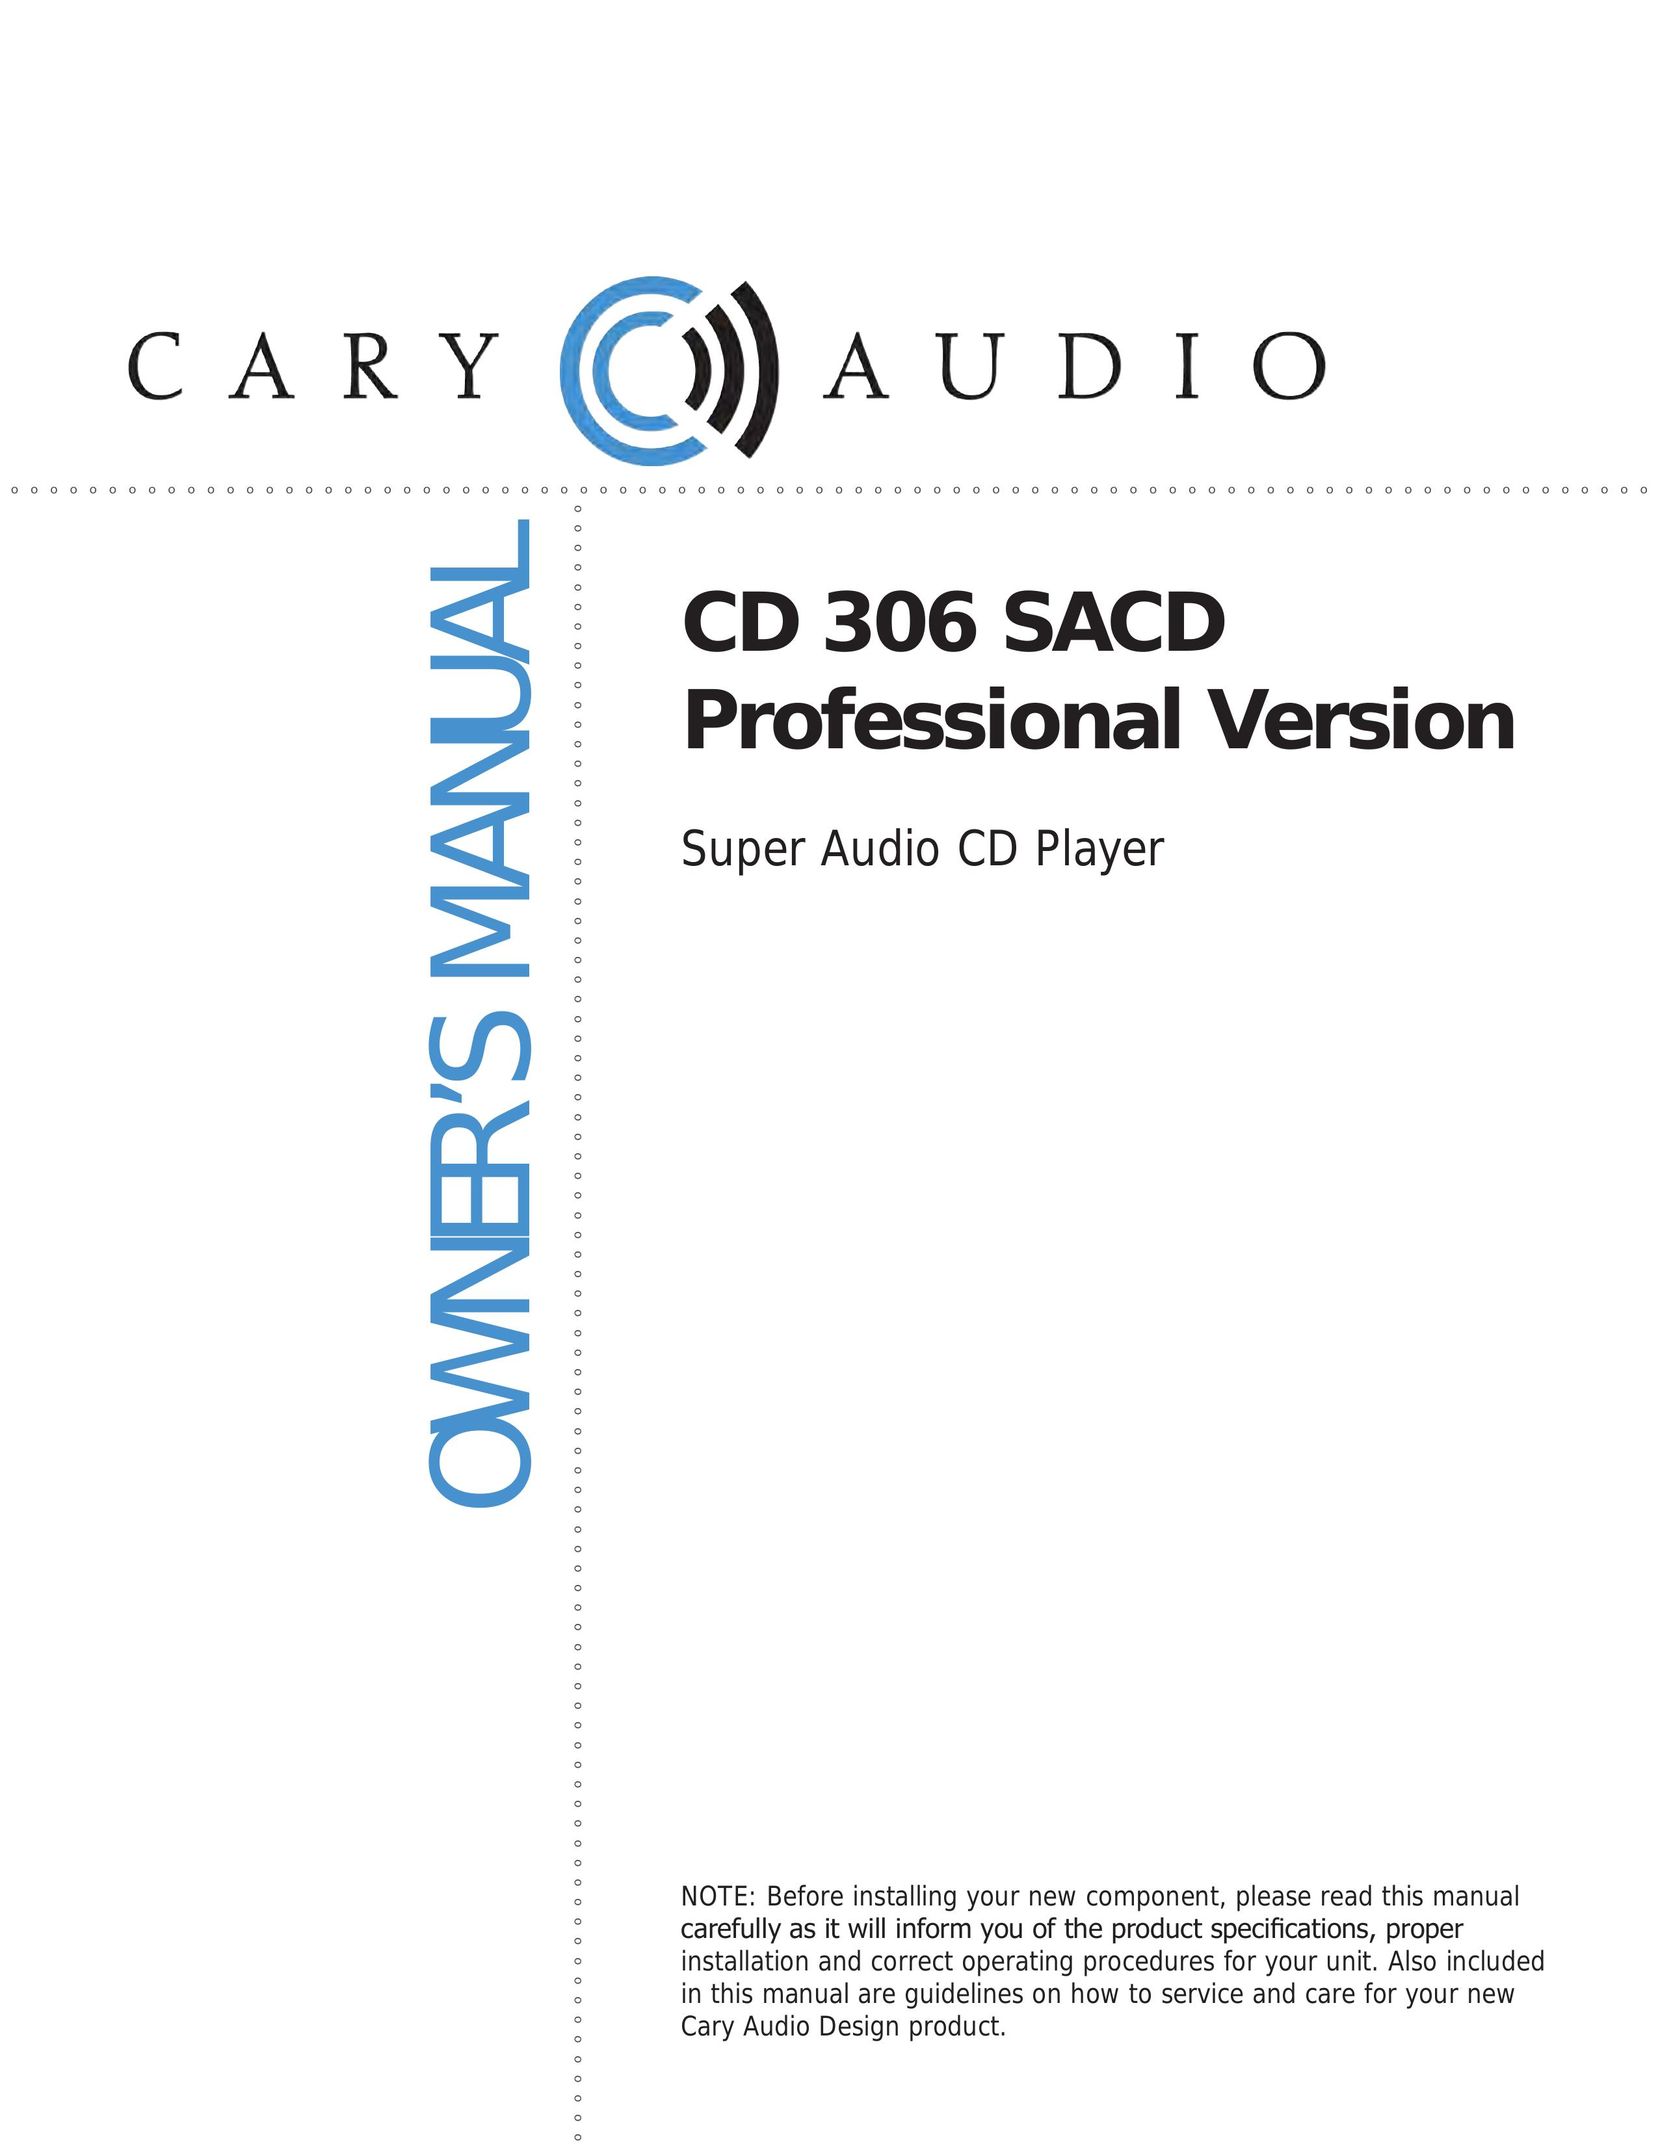 Cary Audio Design CD 306 SACD CD Player User Manual